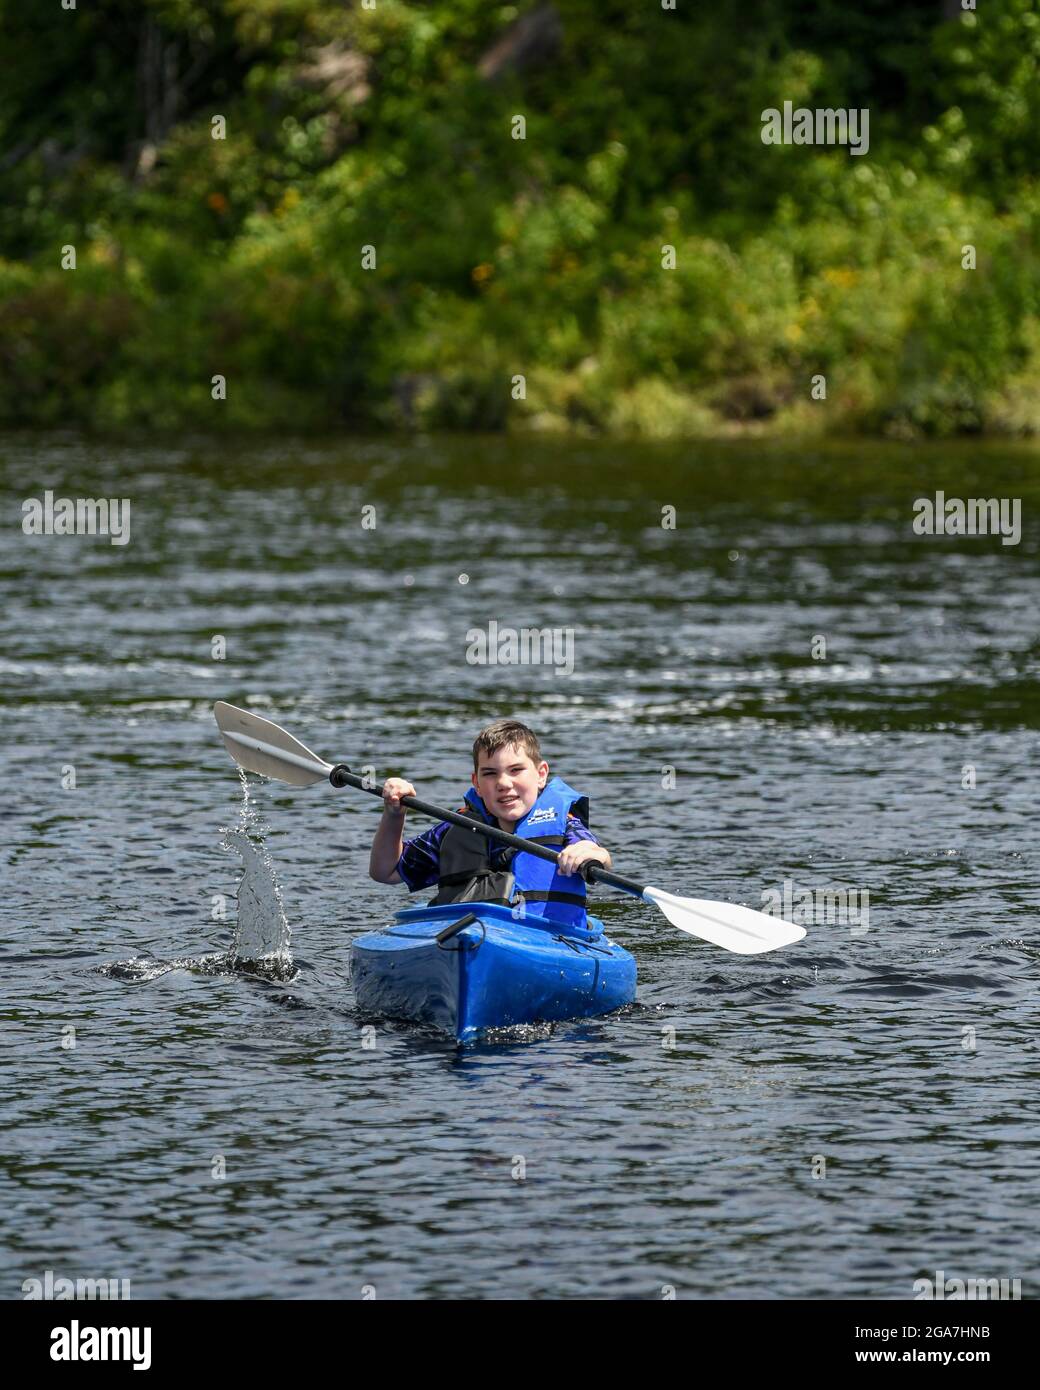 Boy kayaking in Adirondack State Park New York State New England boy in blue kayak wearing a lifejacket lifevest / life jacket or life vest Stock Photo